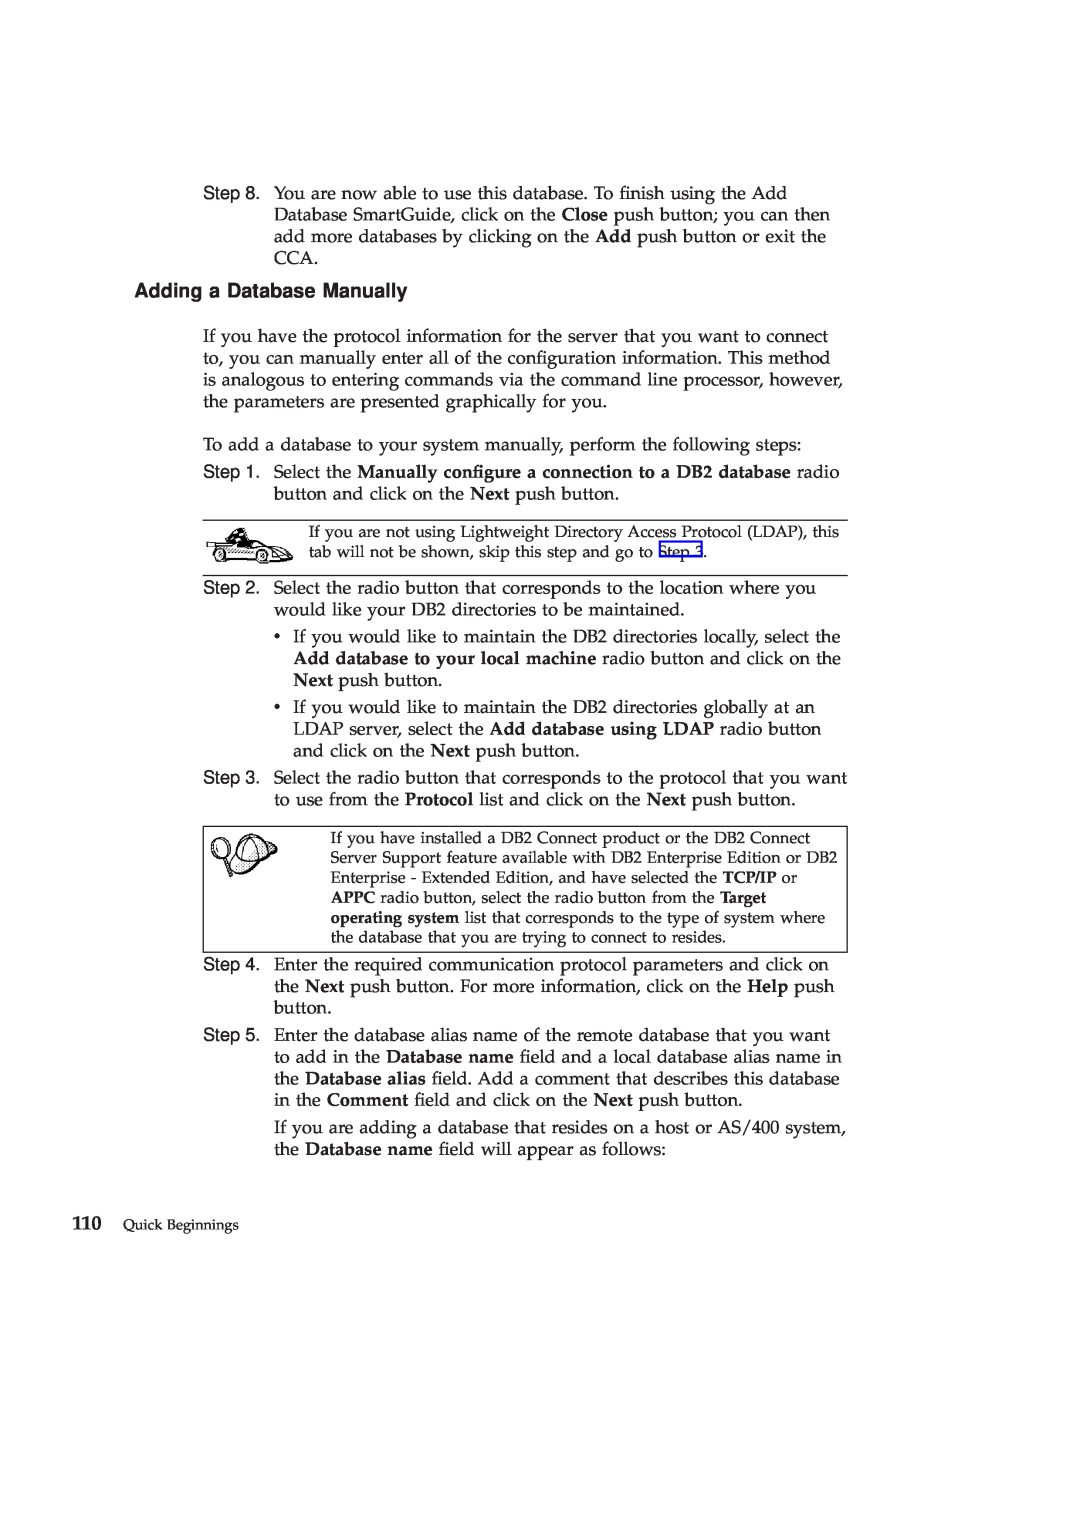 IBM GC09-2830-00 manual Adding a Database Manually, Quick Beginnings 